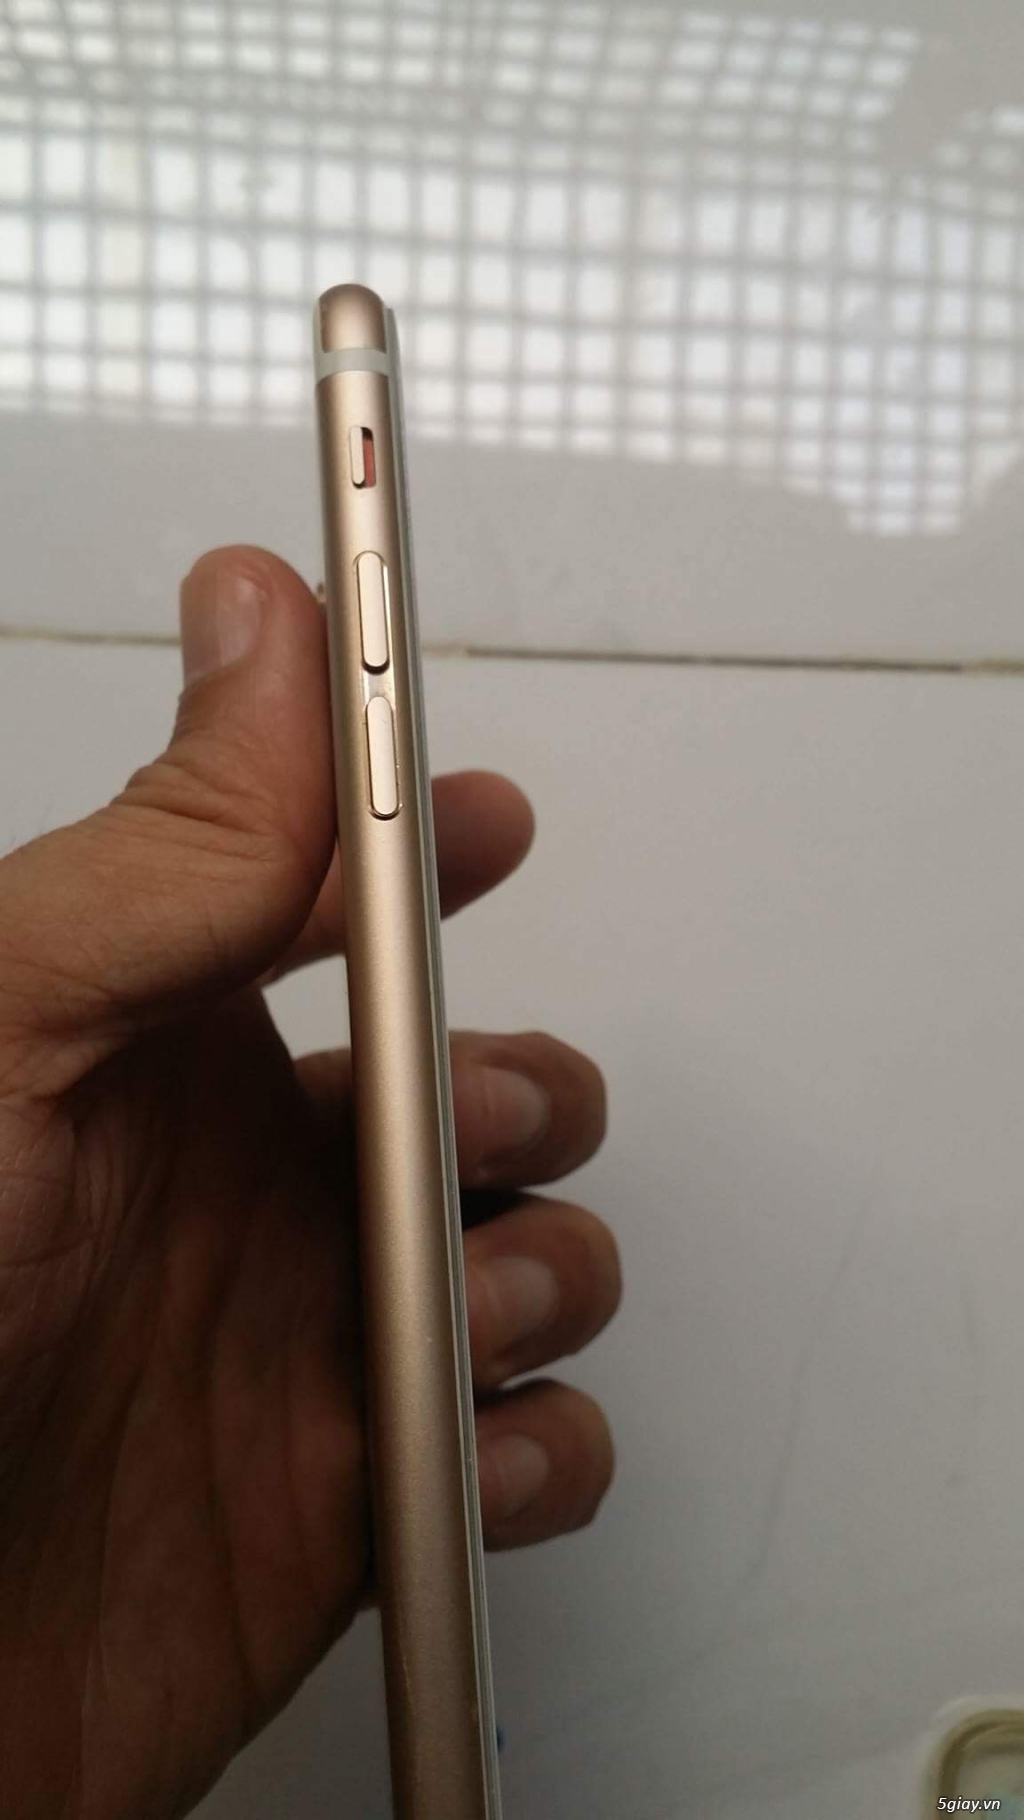 Iphone 6s plus 64gb gold vàng - 2